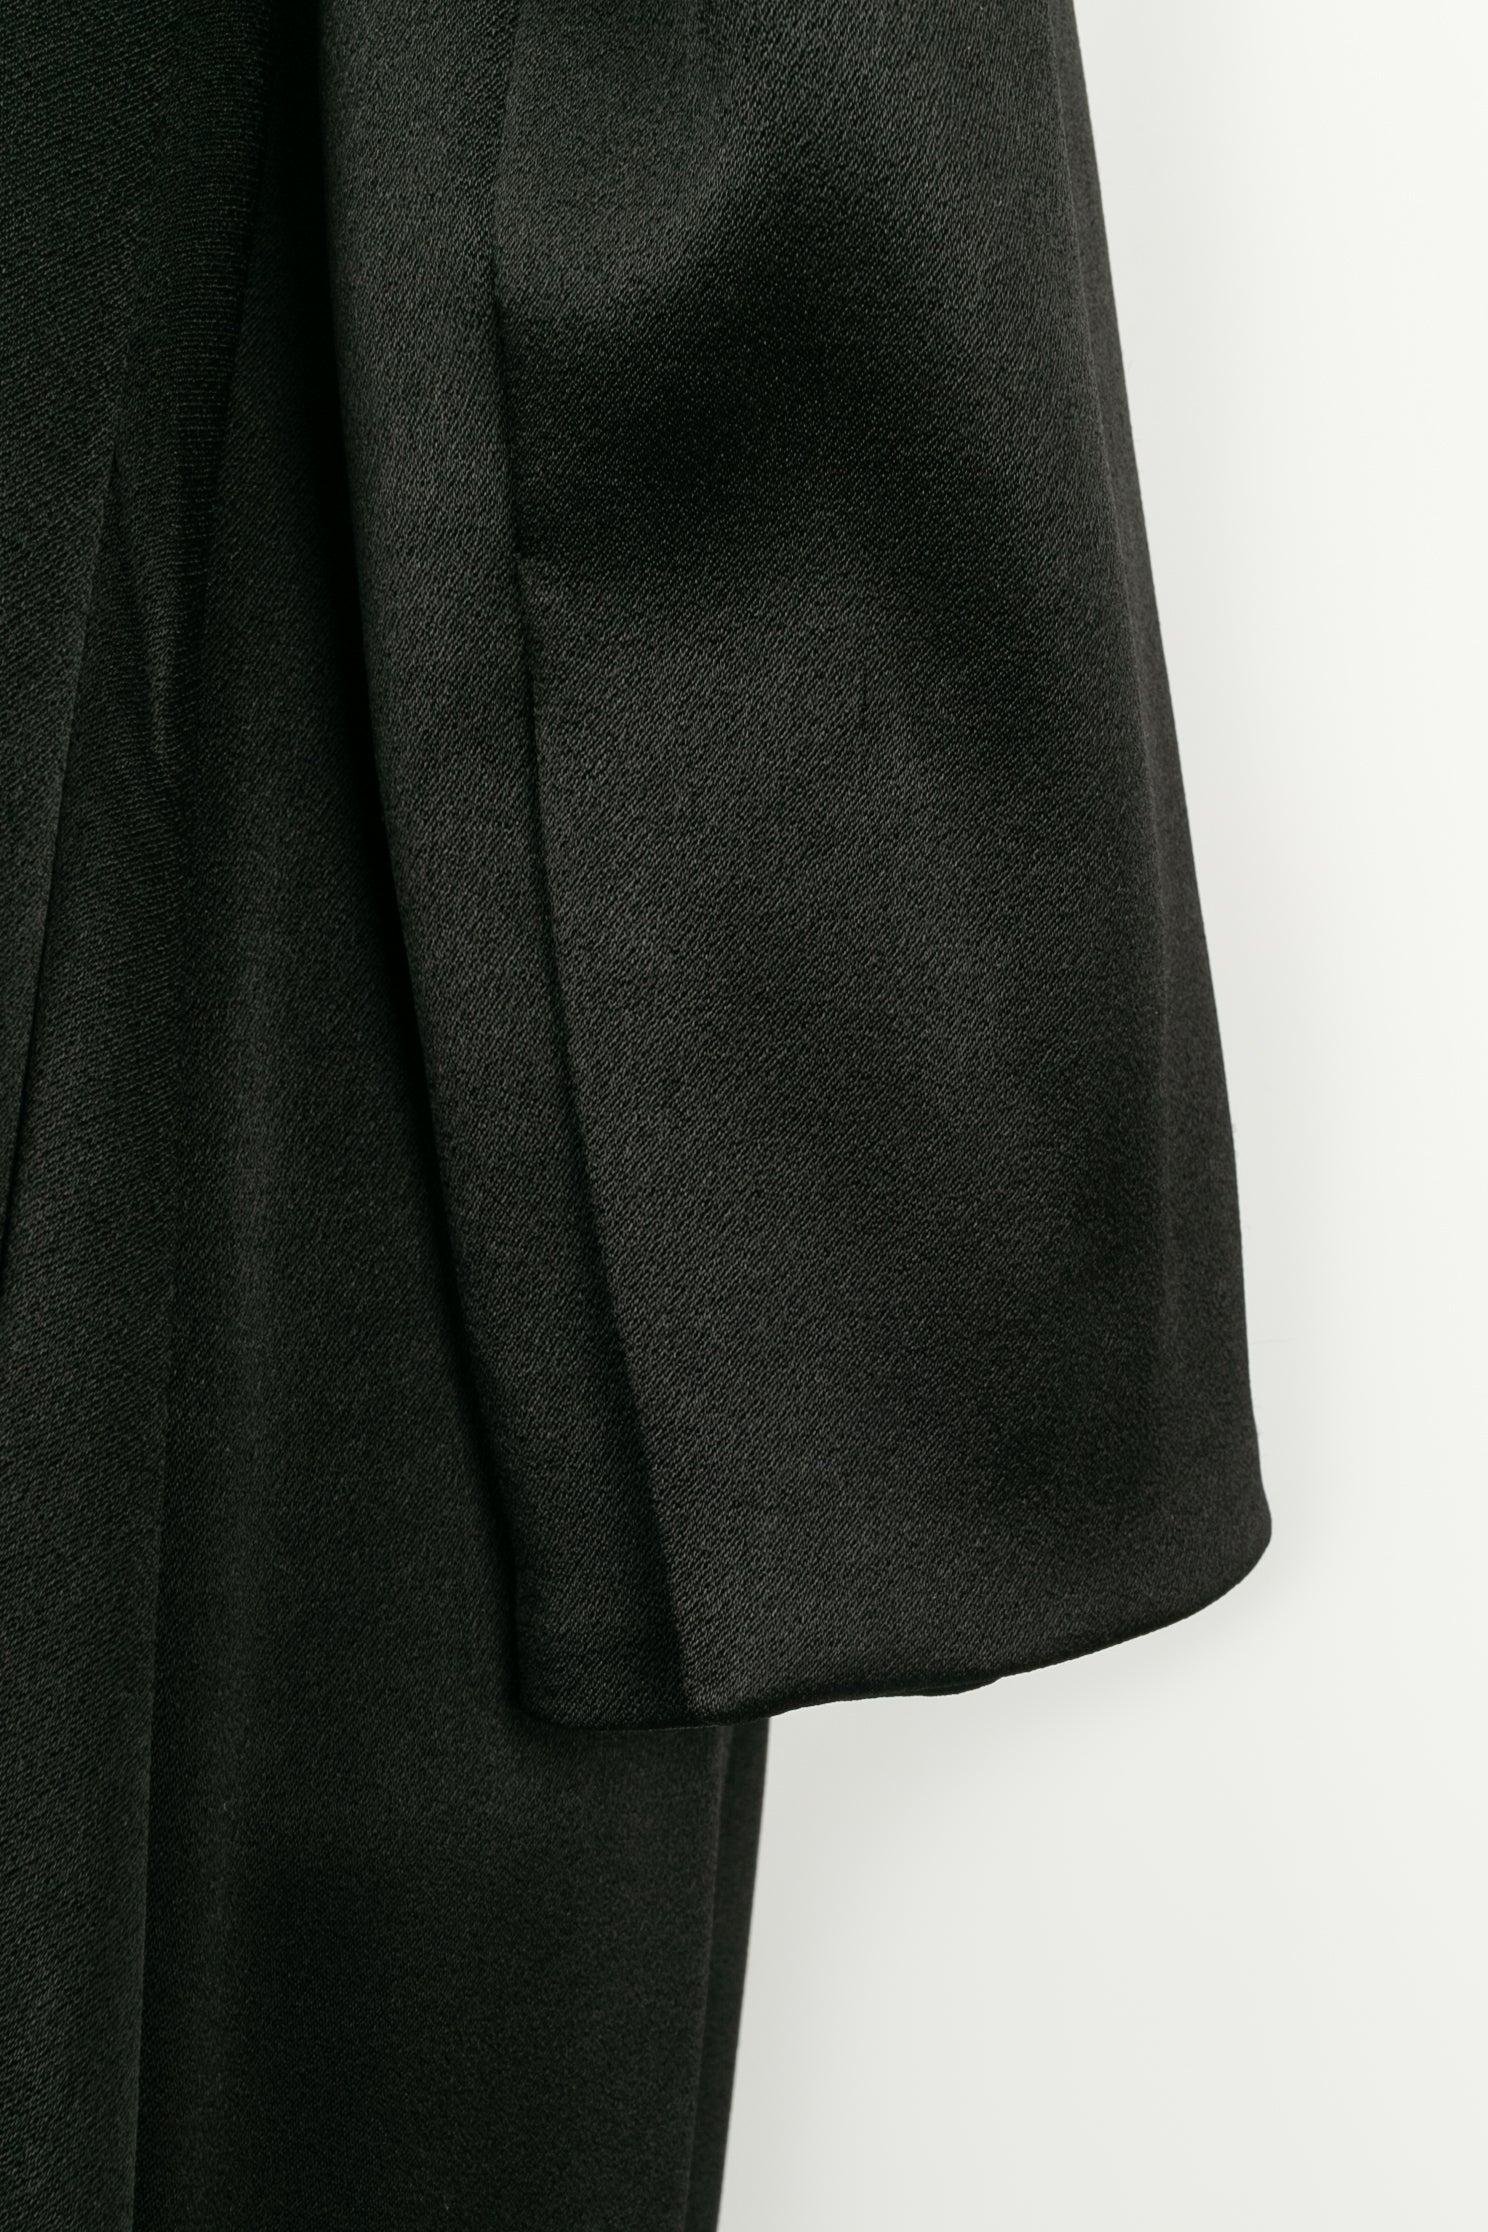 Paule Ka Black Maxi Dress in Duchess Satin, 2022 For Sale 1